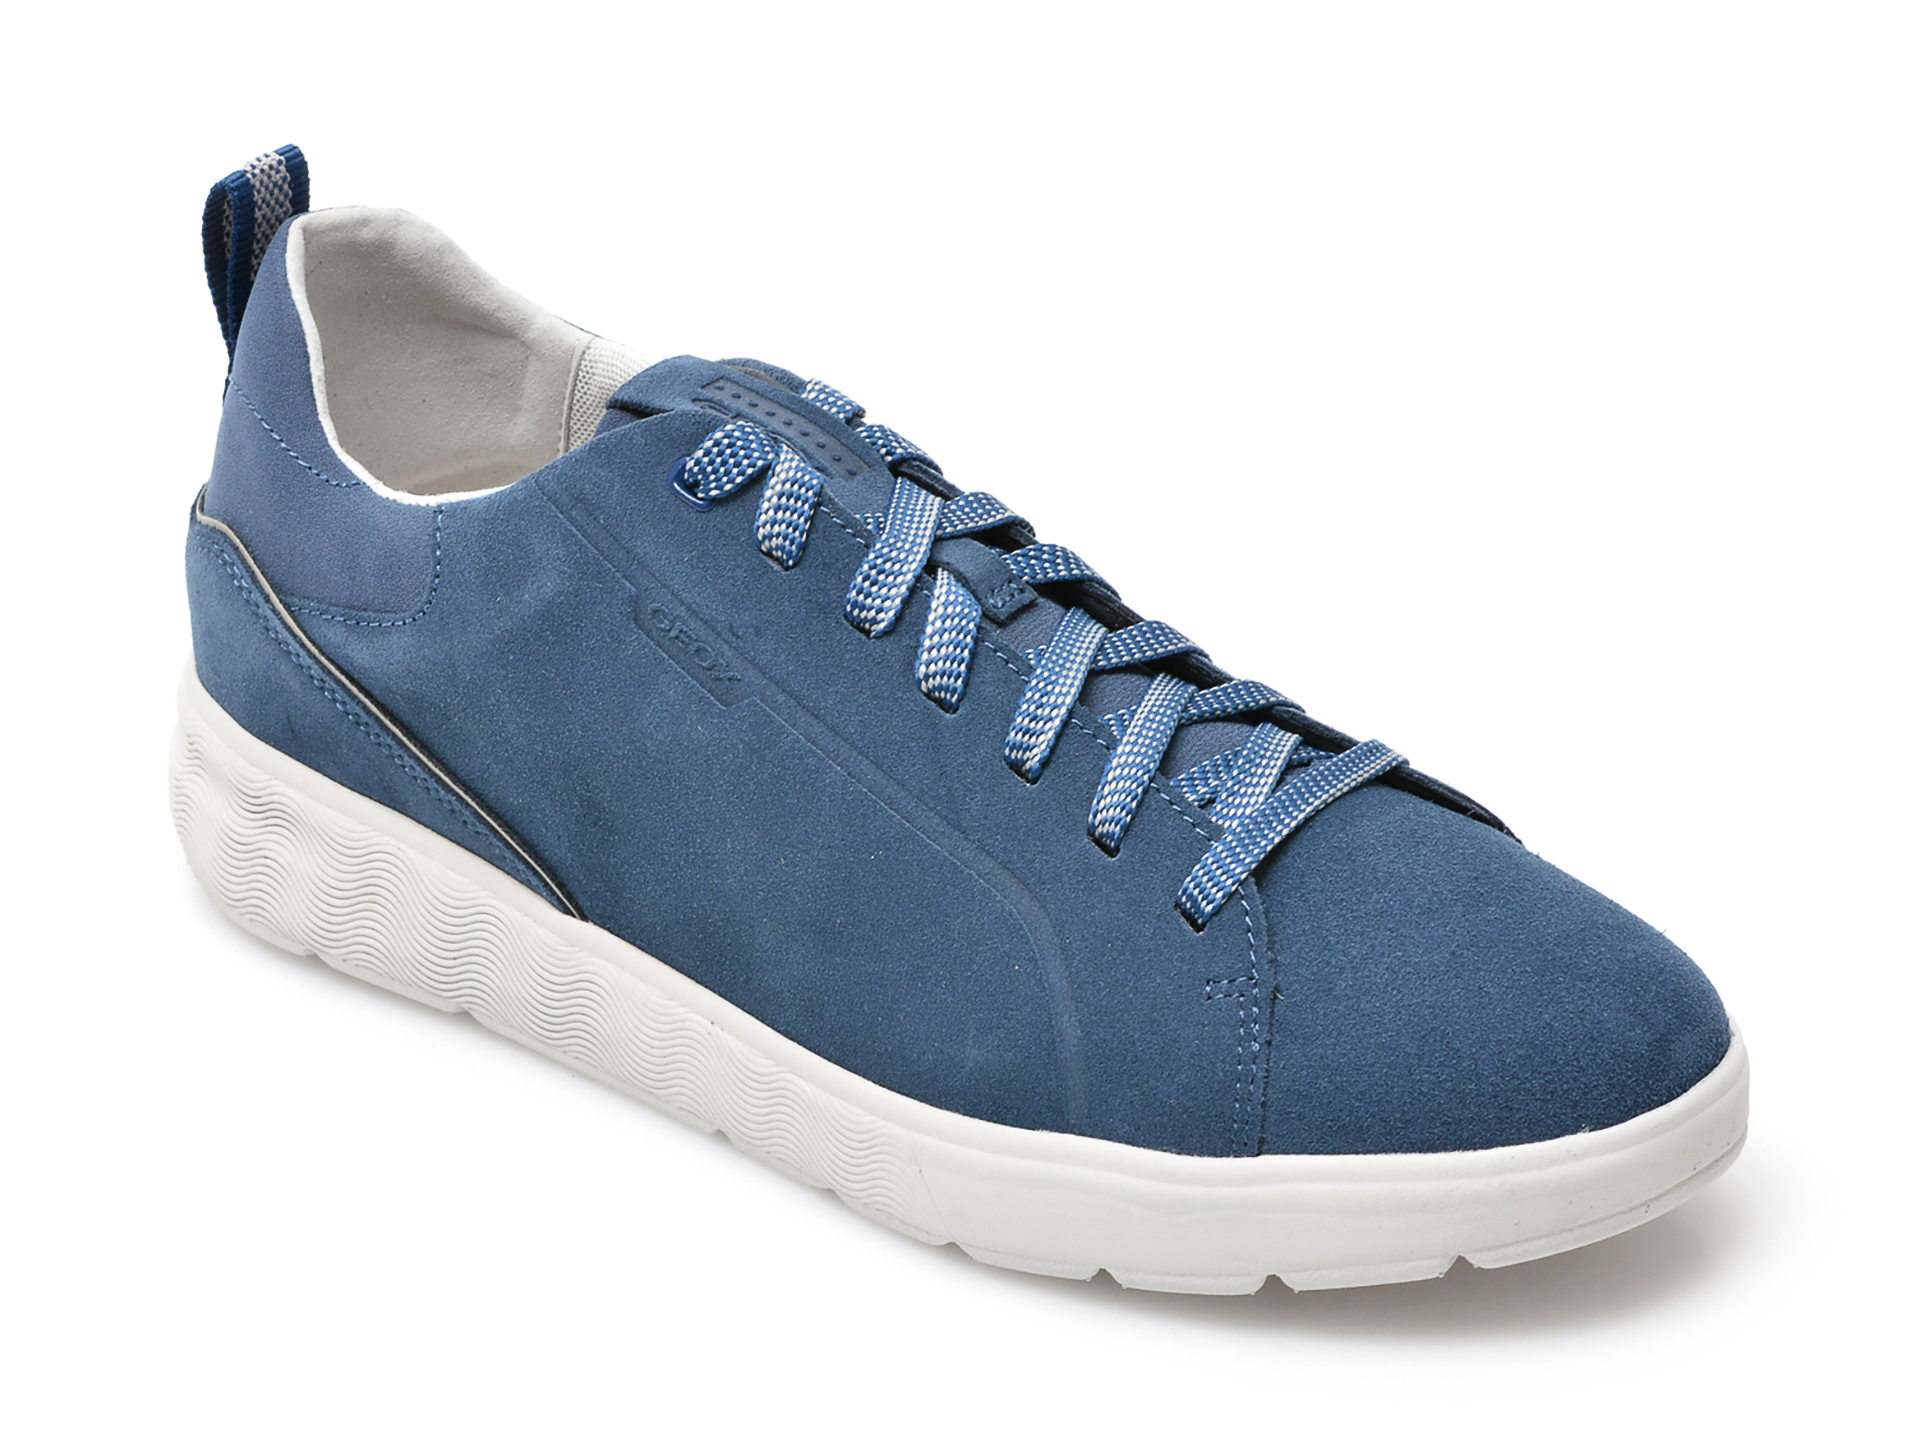 Pantofi sport GEOX albastri, U25E7B, din piele intoarsa Geox